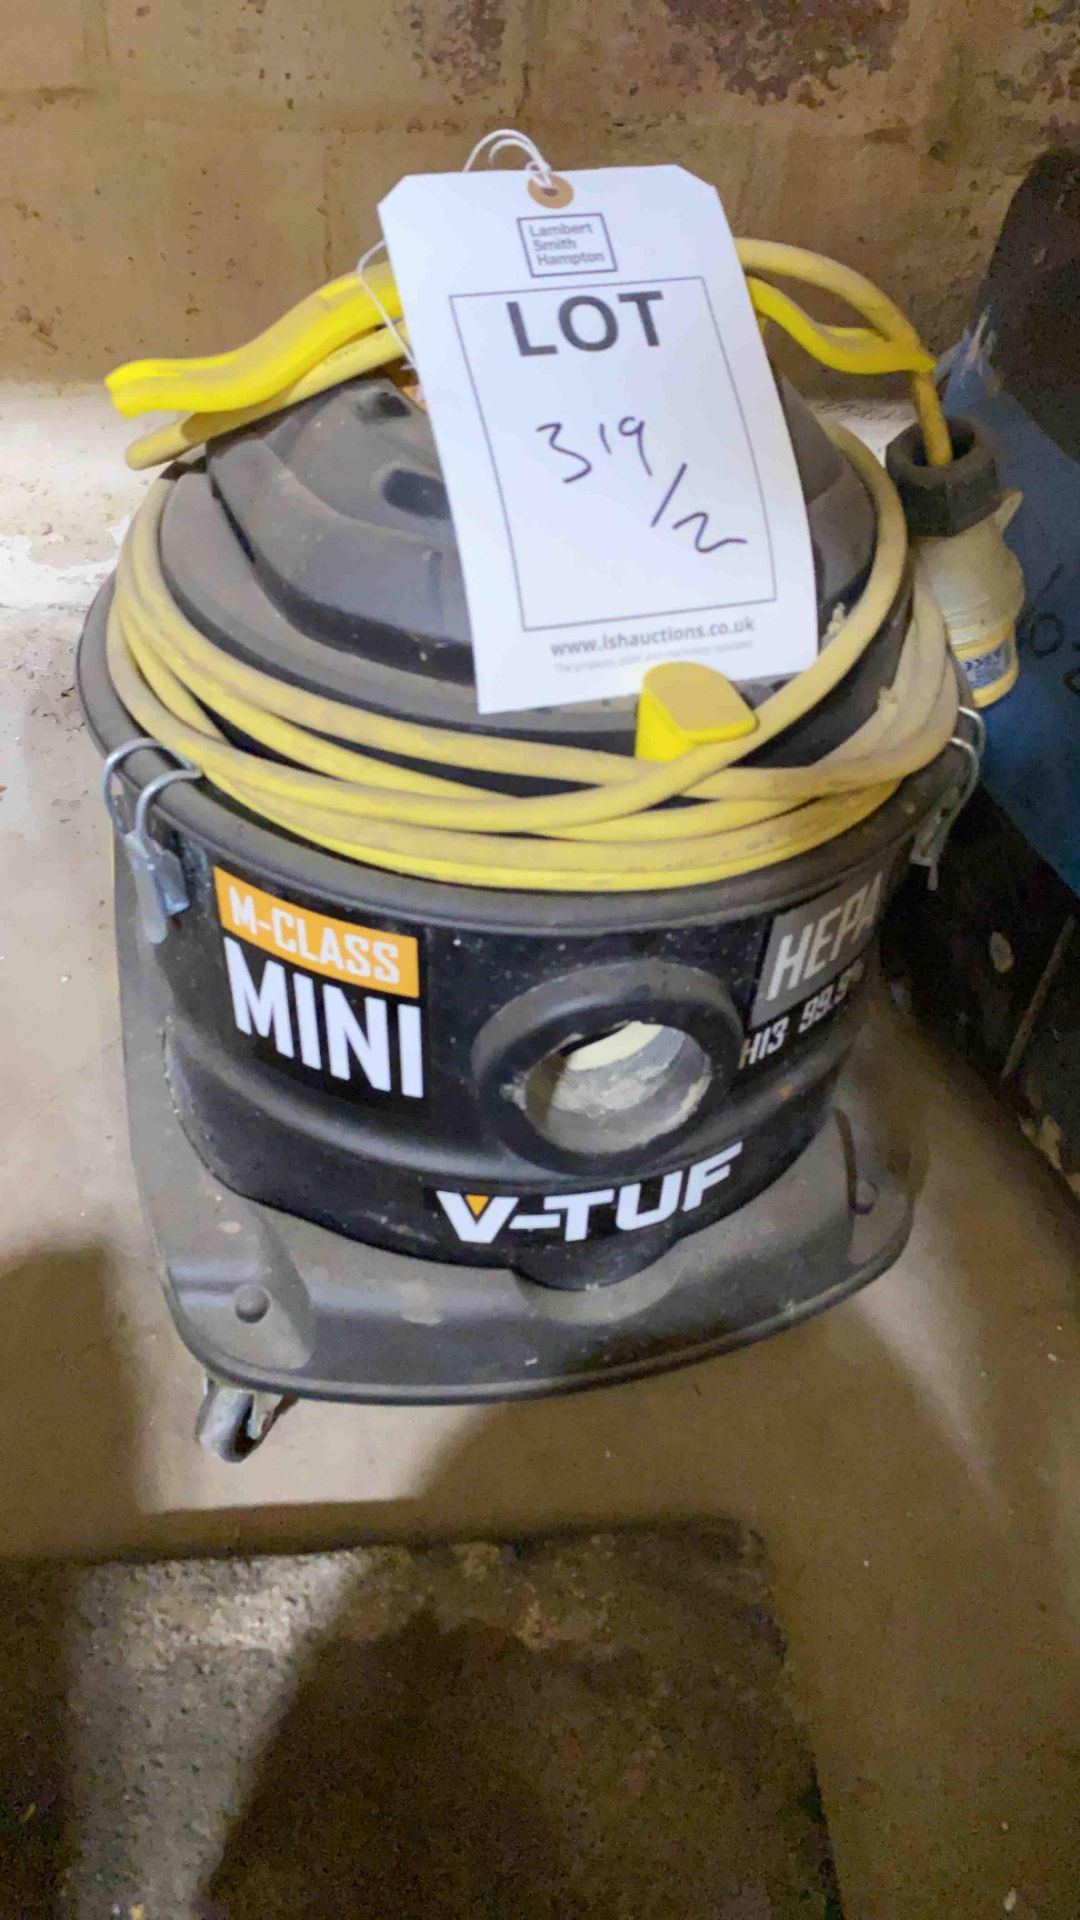 v-tuff mclass mini and generic shop vacuum 110v - Image 2 of 8